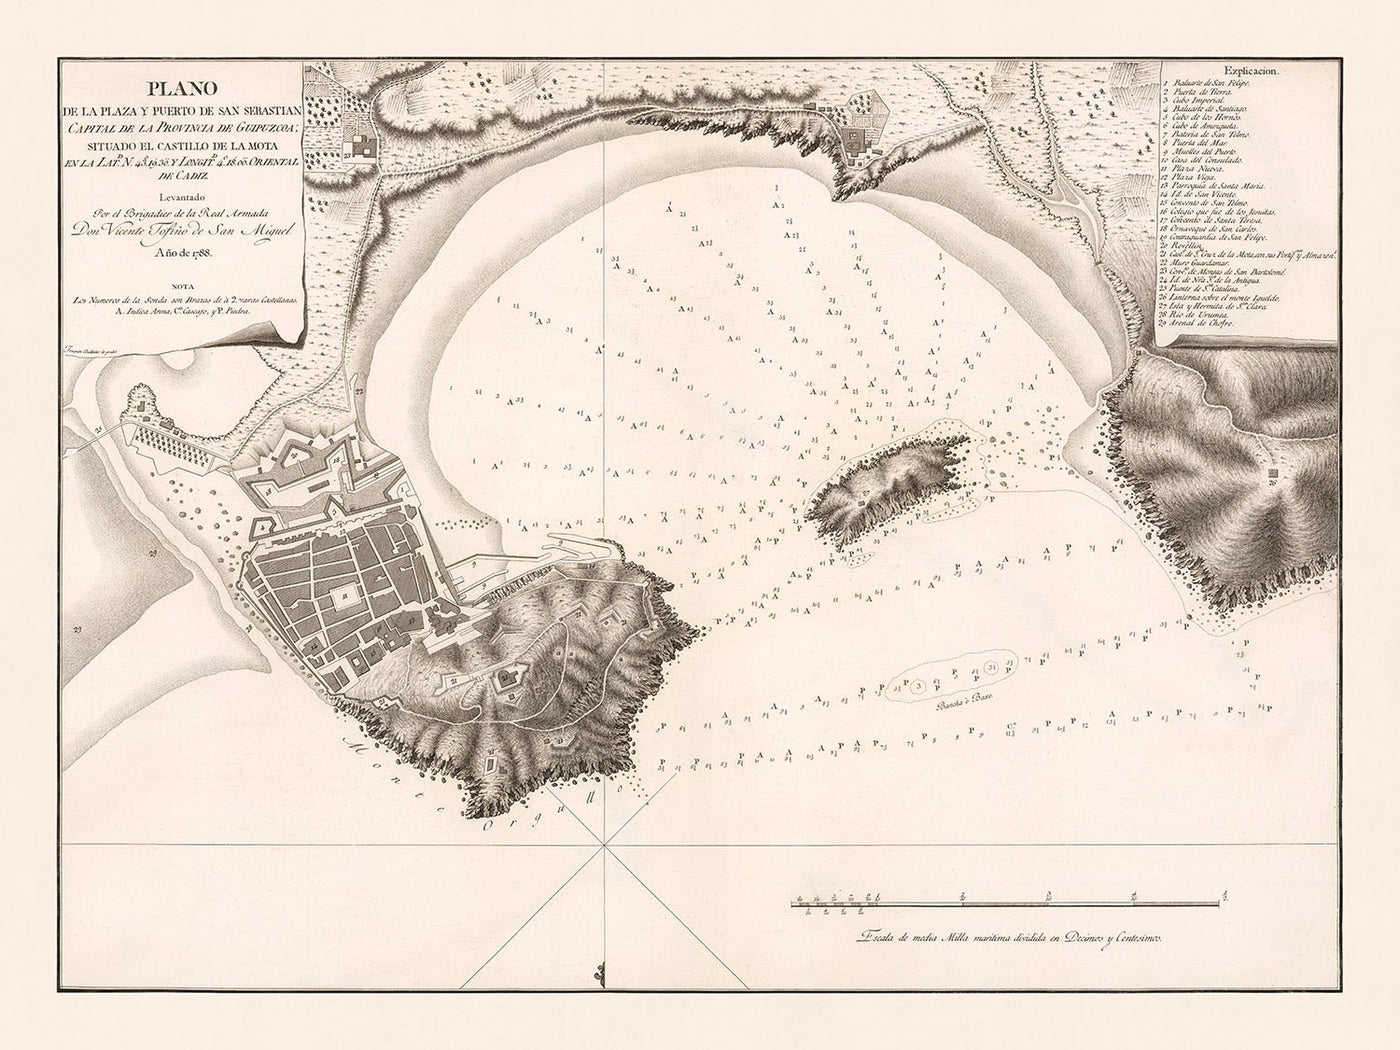 Old Map of San Sebastian, 1788: Bahía de la Concha, Plaza de la Constitución, Mount Urgull, San Telmo, Good Shepherd Cathedral